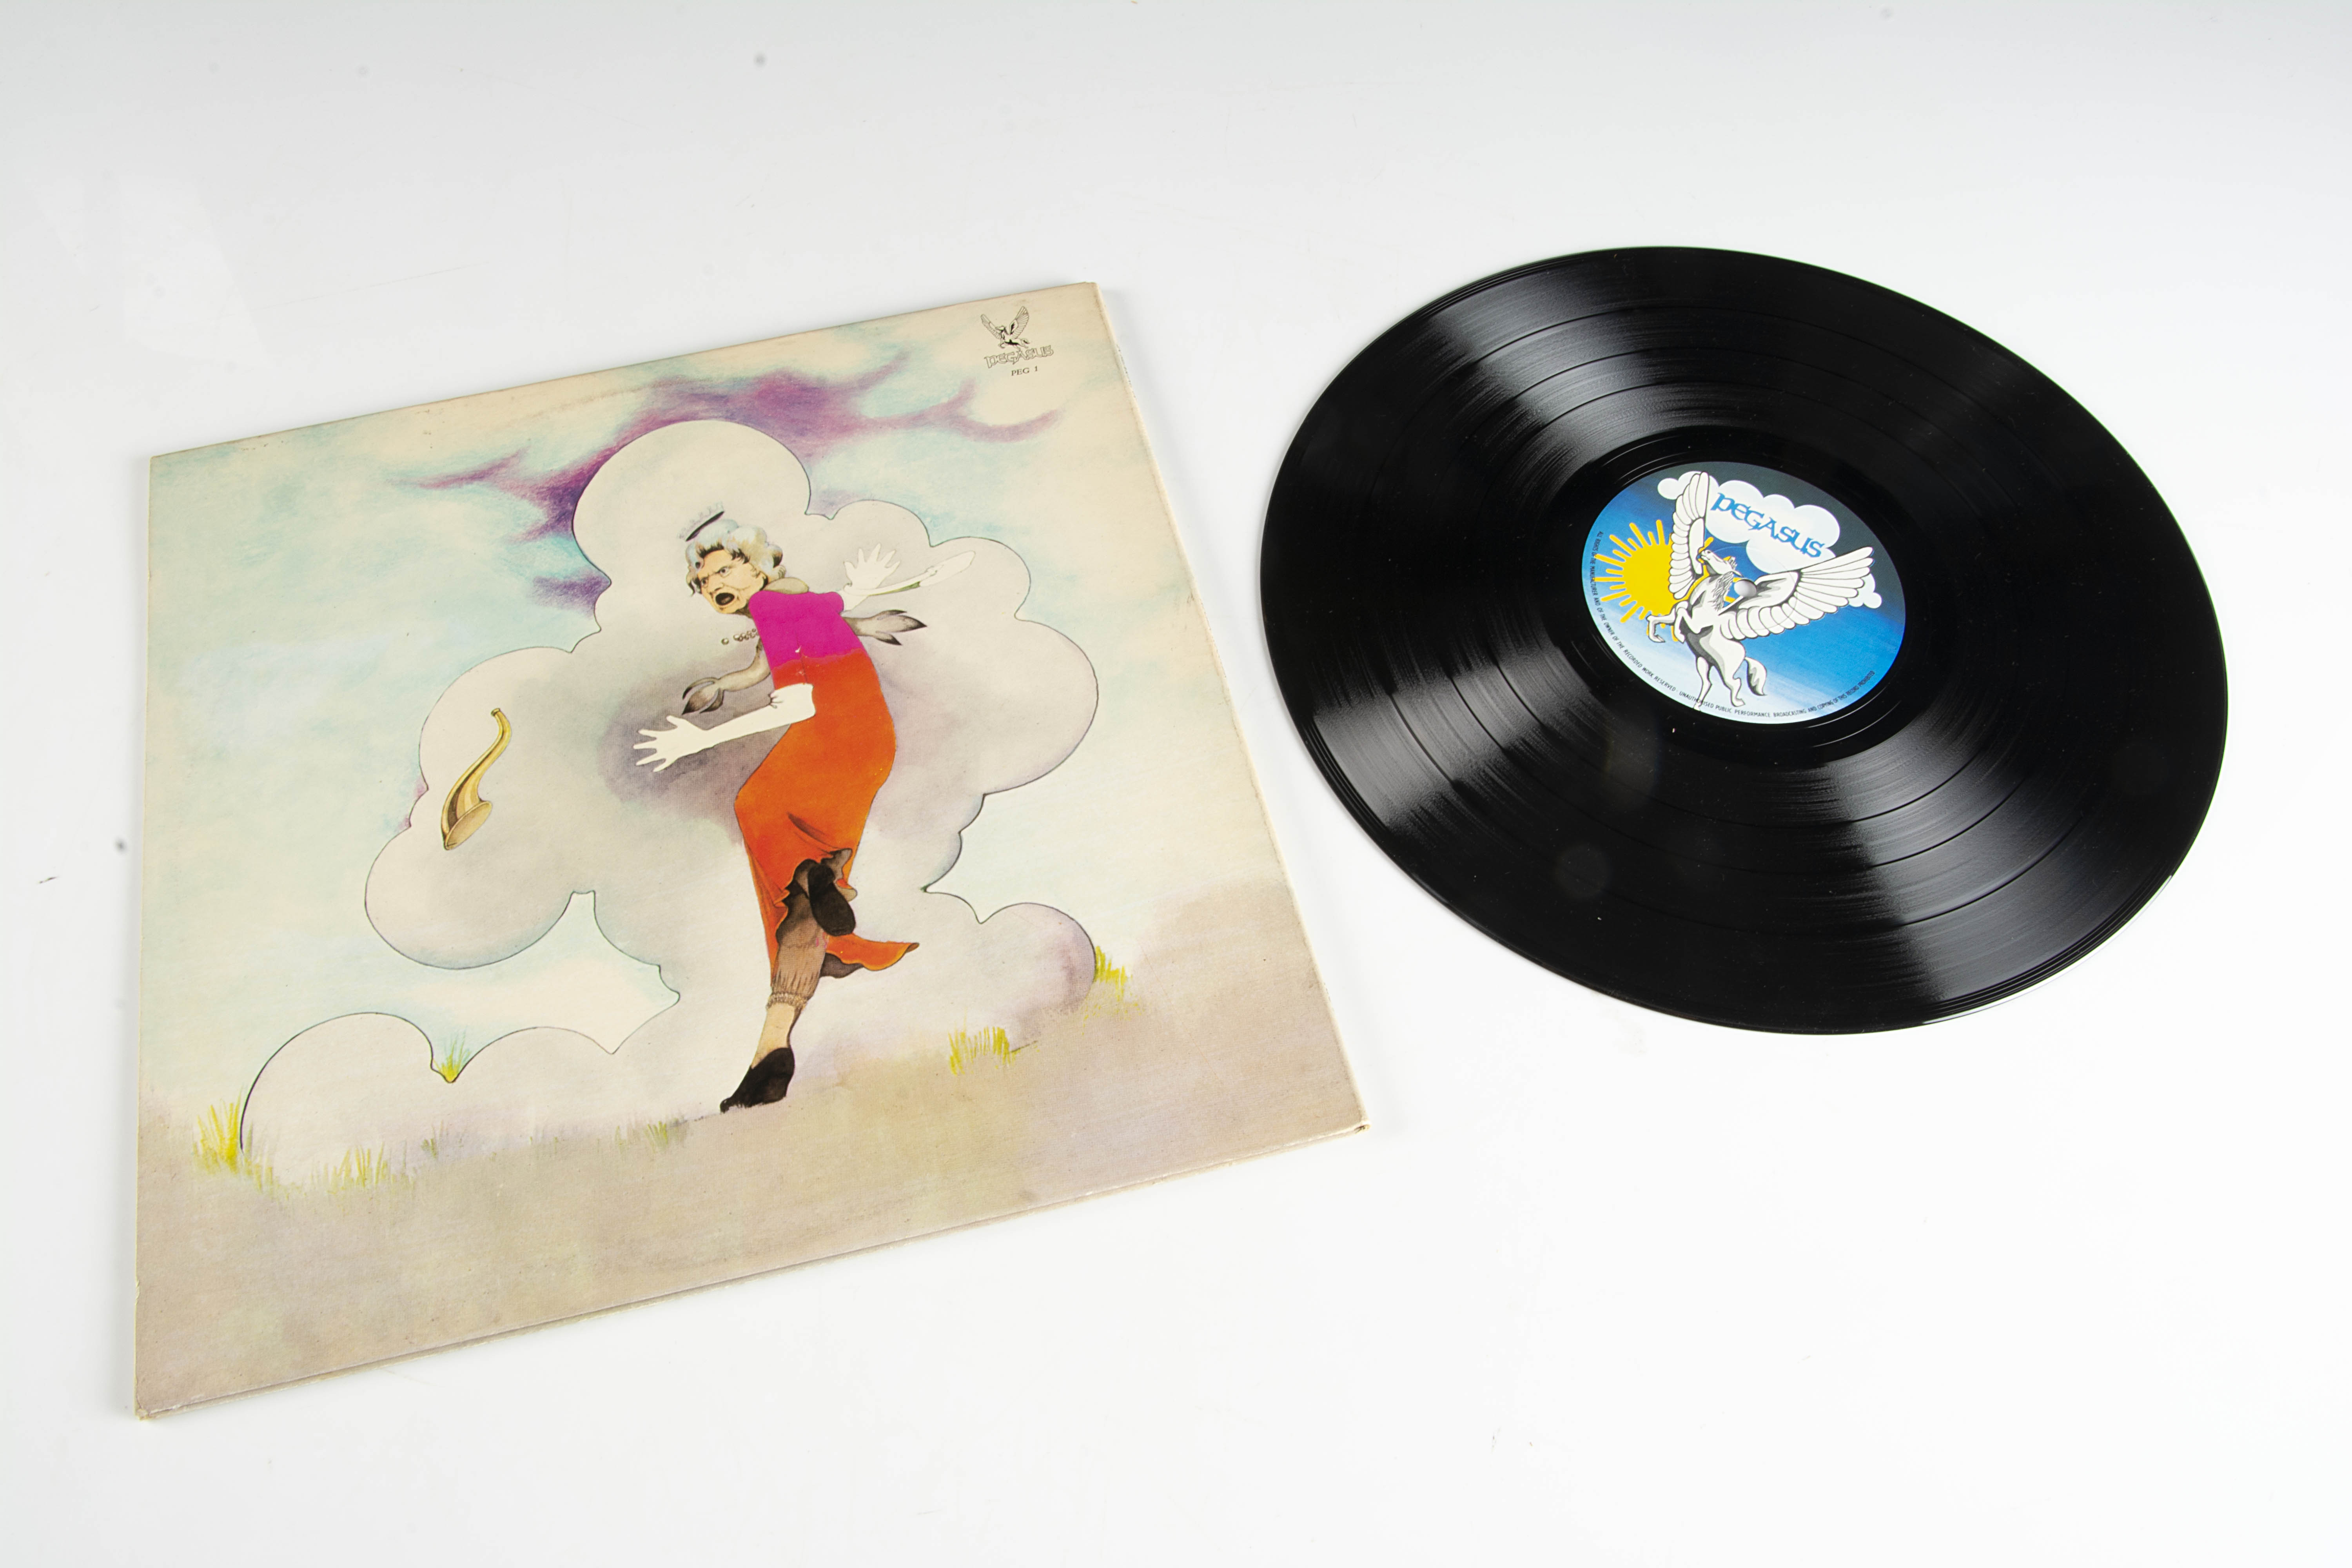 Atomic Rooster LP, In Hearing of Atomic Rooster LP - Original UK release 1971 on Pegasus (PEG1) - - Image 2 of 2